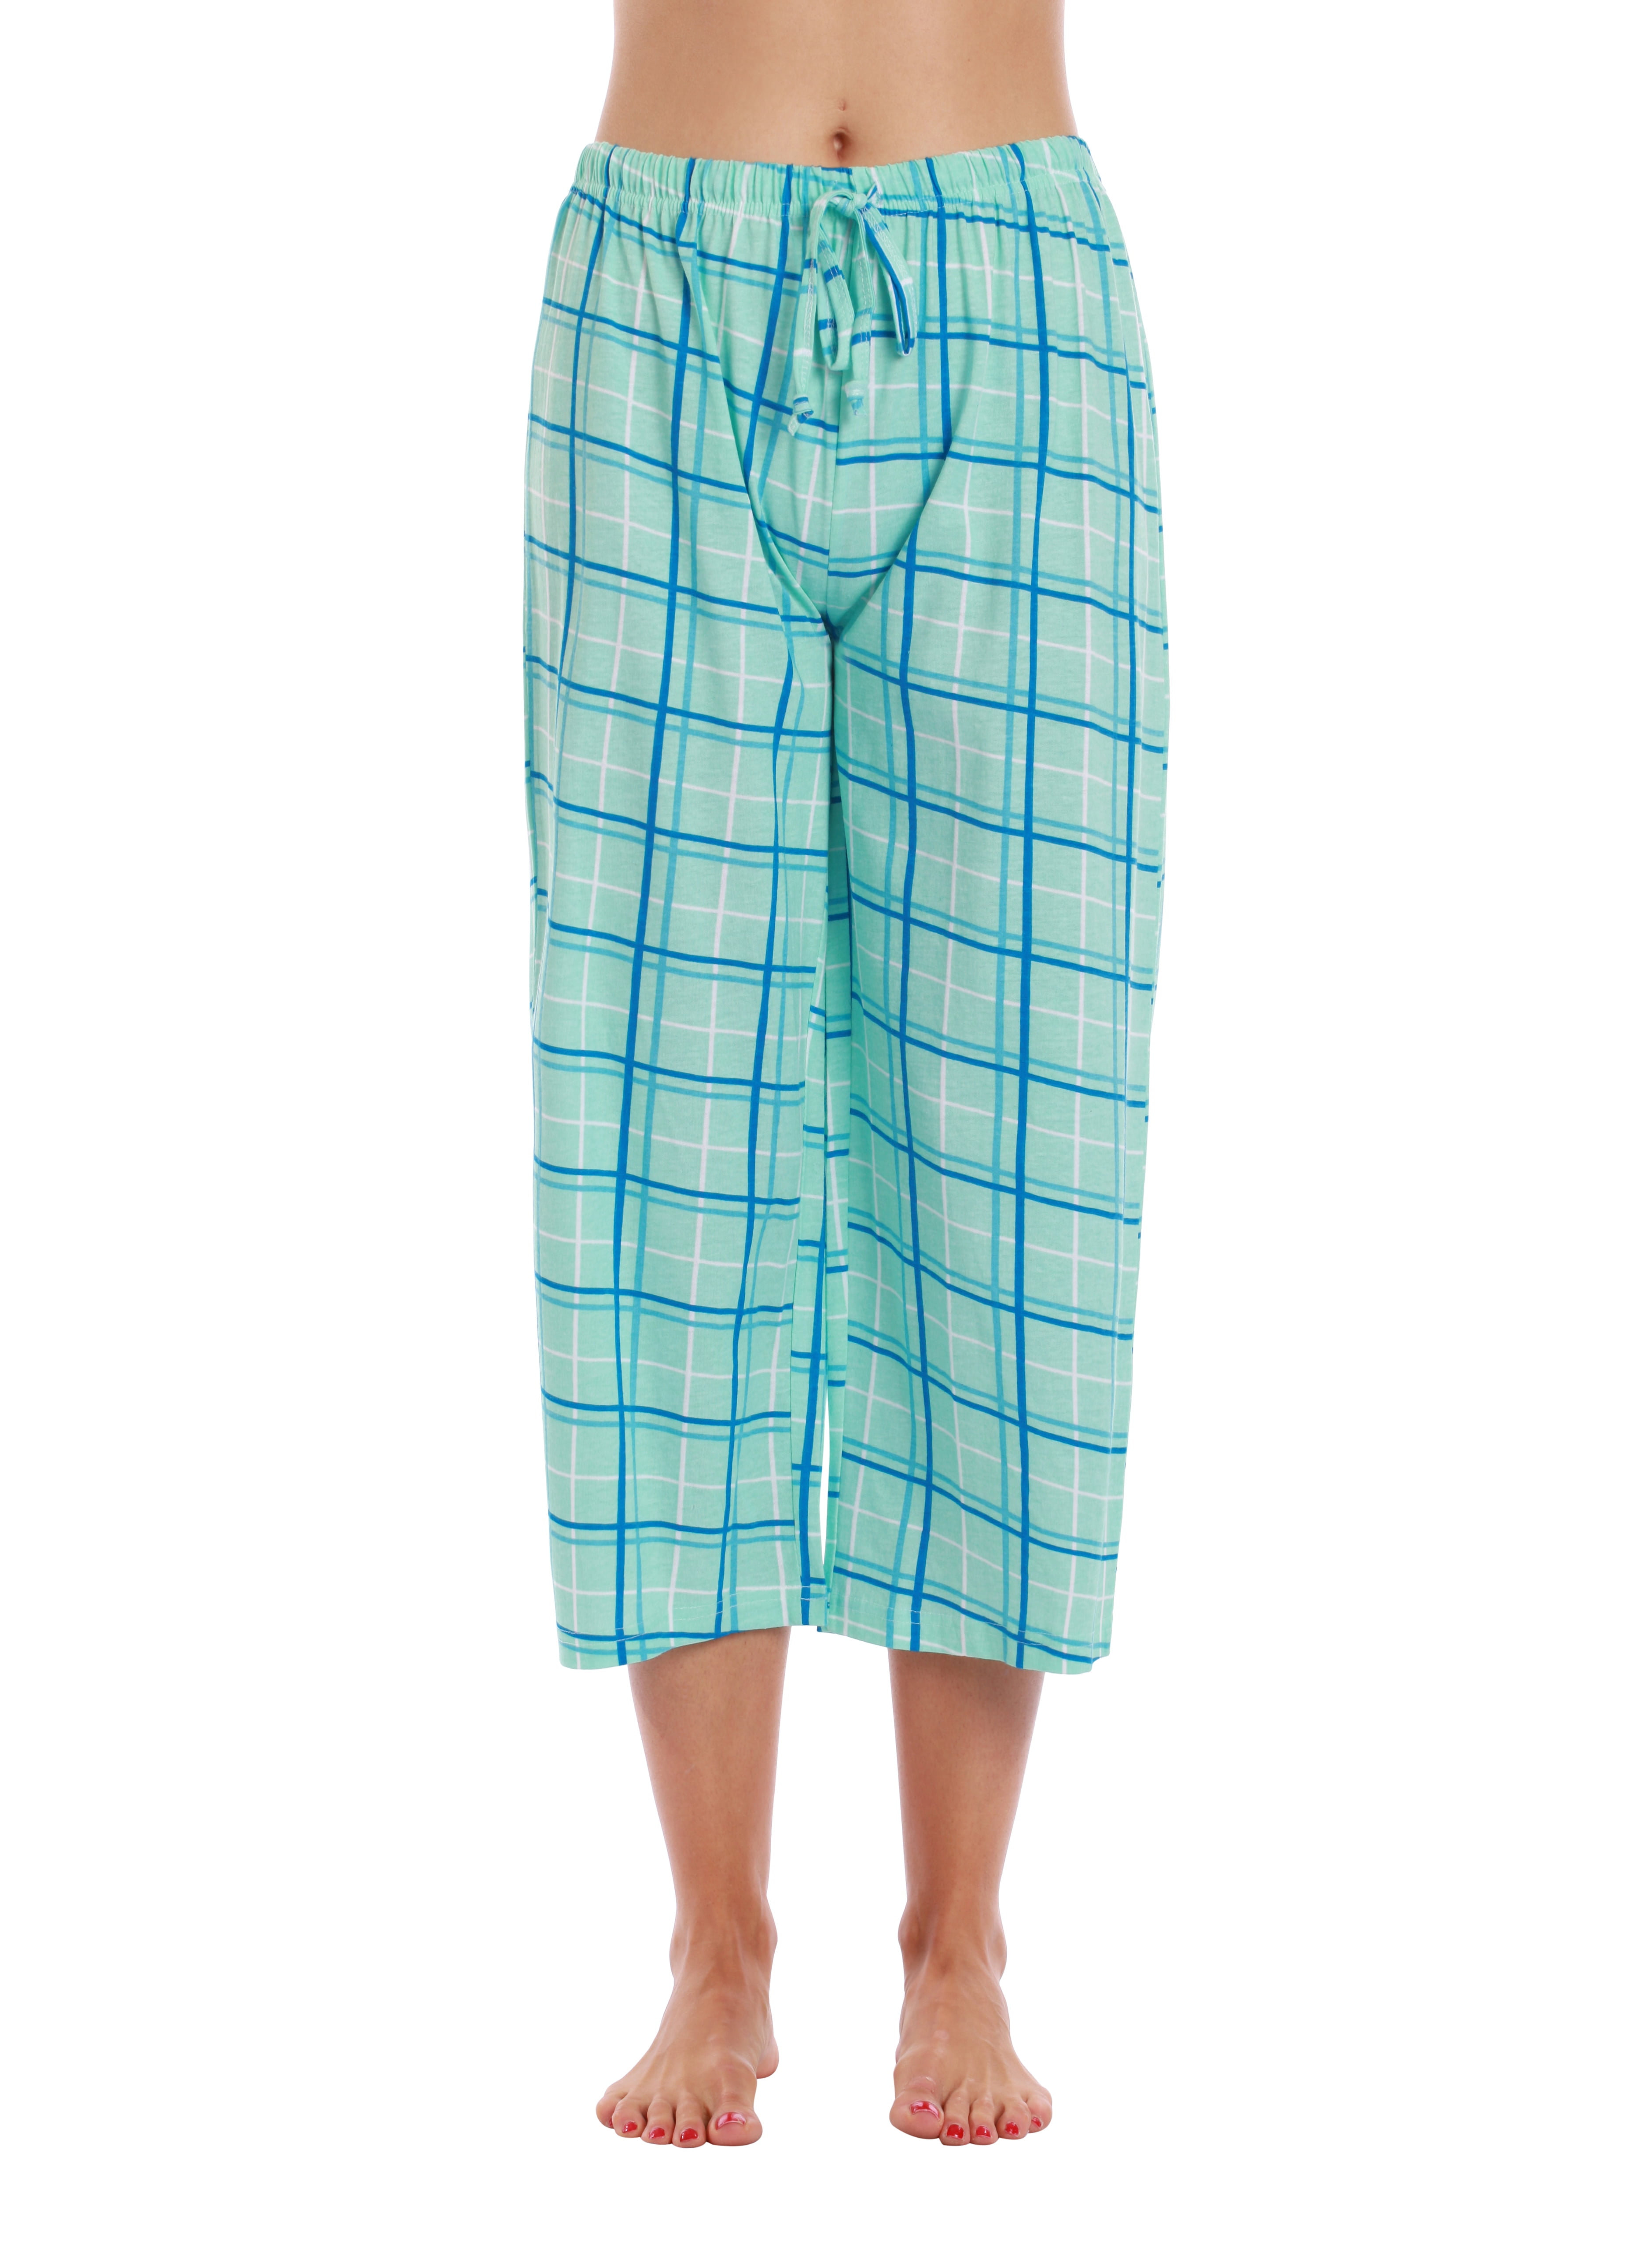 Just Love Womens Pajamas Cotton Capri Pants 6331-10114-S 